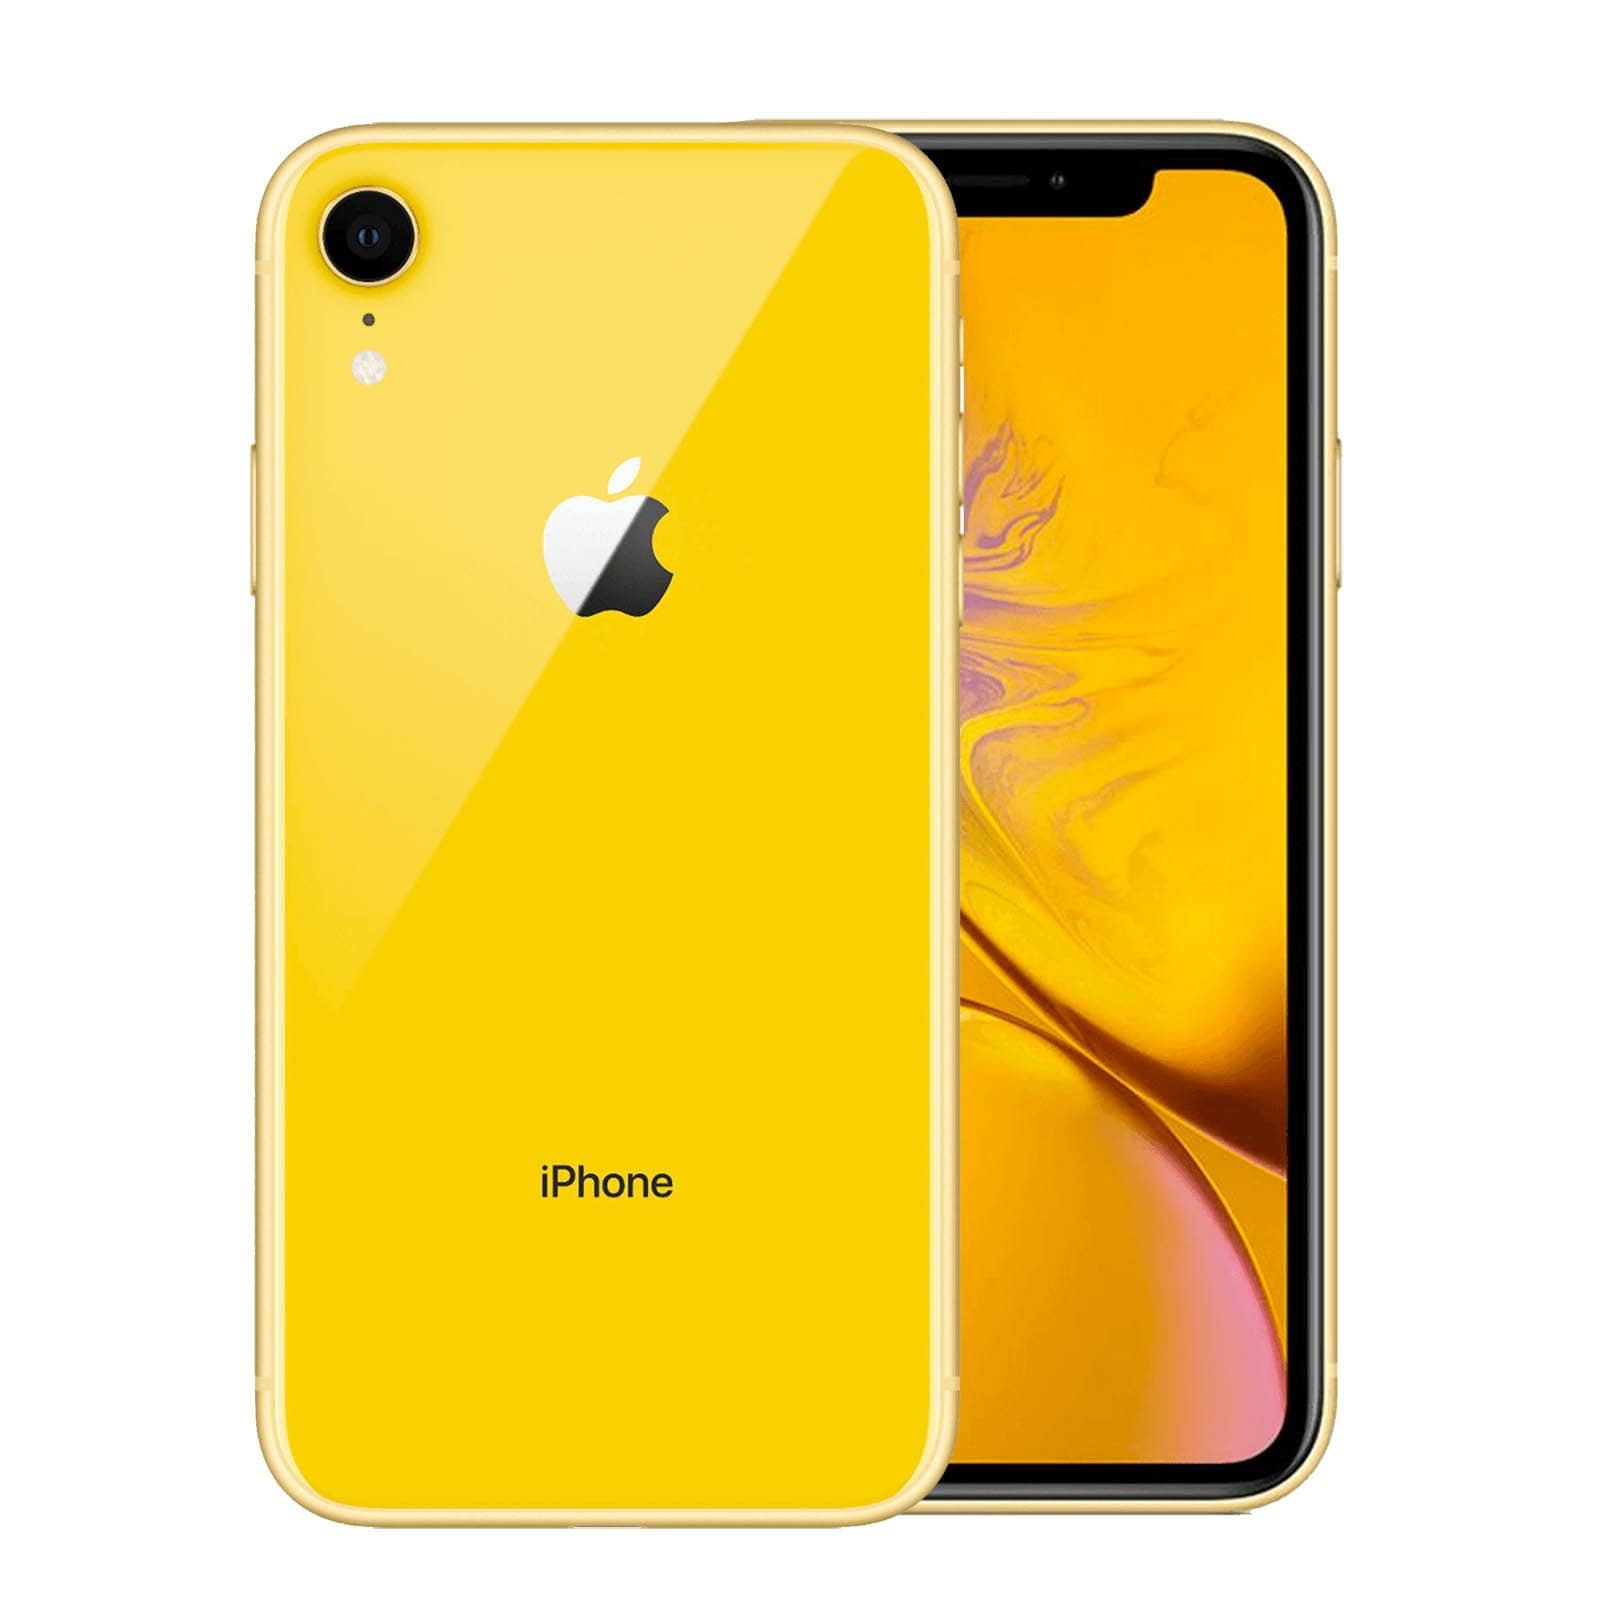 Apple iPhone XR 64GB Yellow Good - Unlocked 64GB Yellow Good